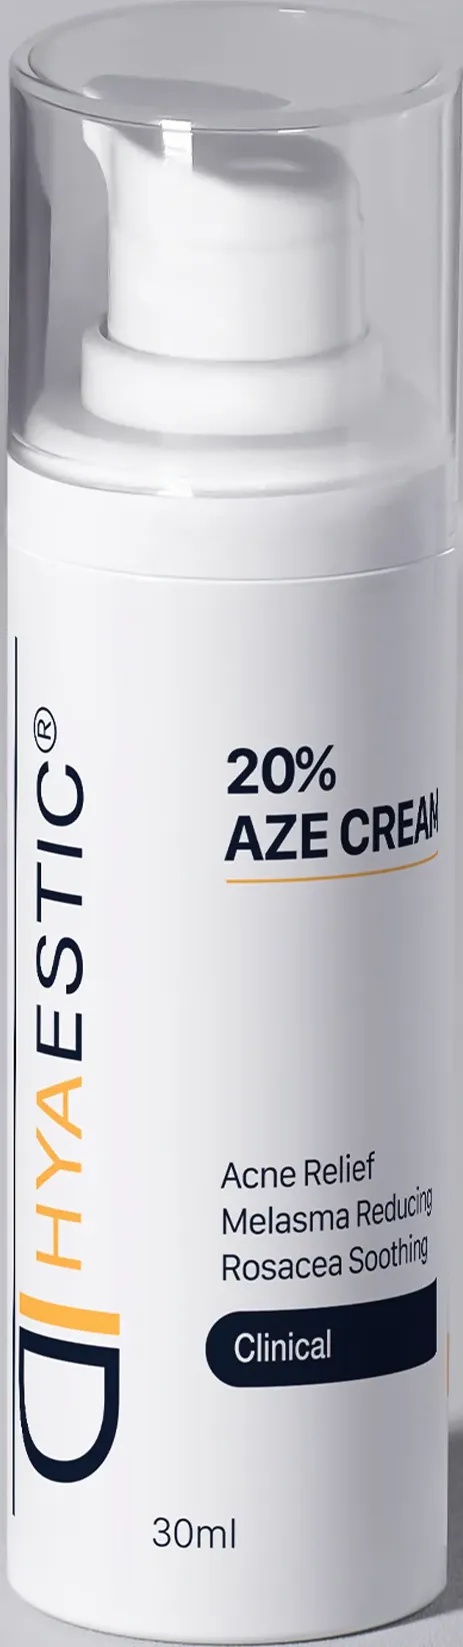 Hyaestic 20% Aze Cream